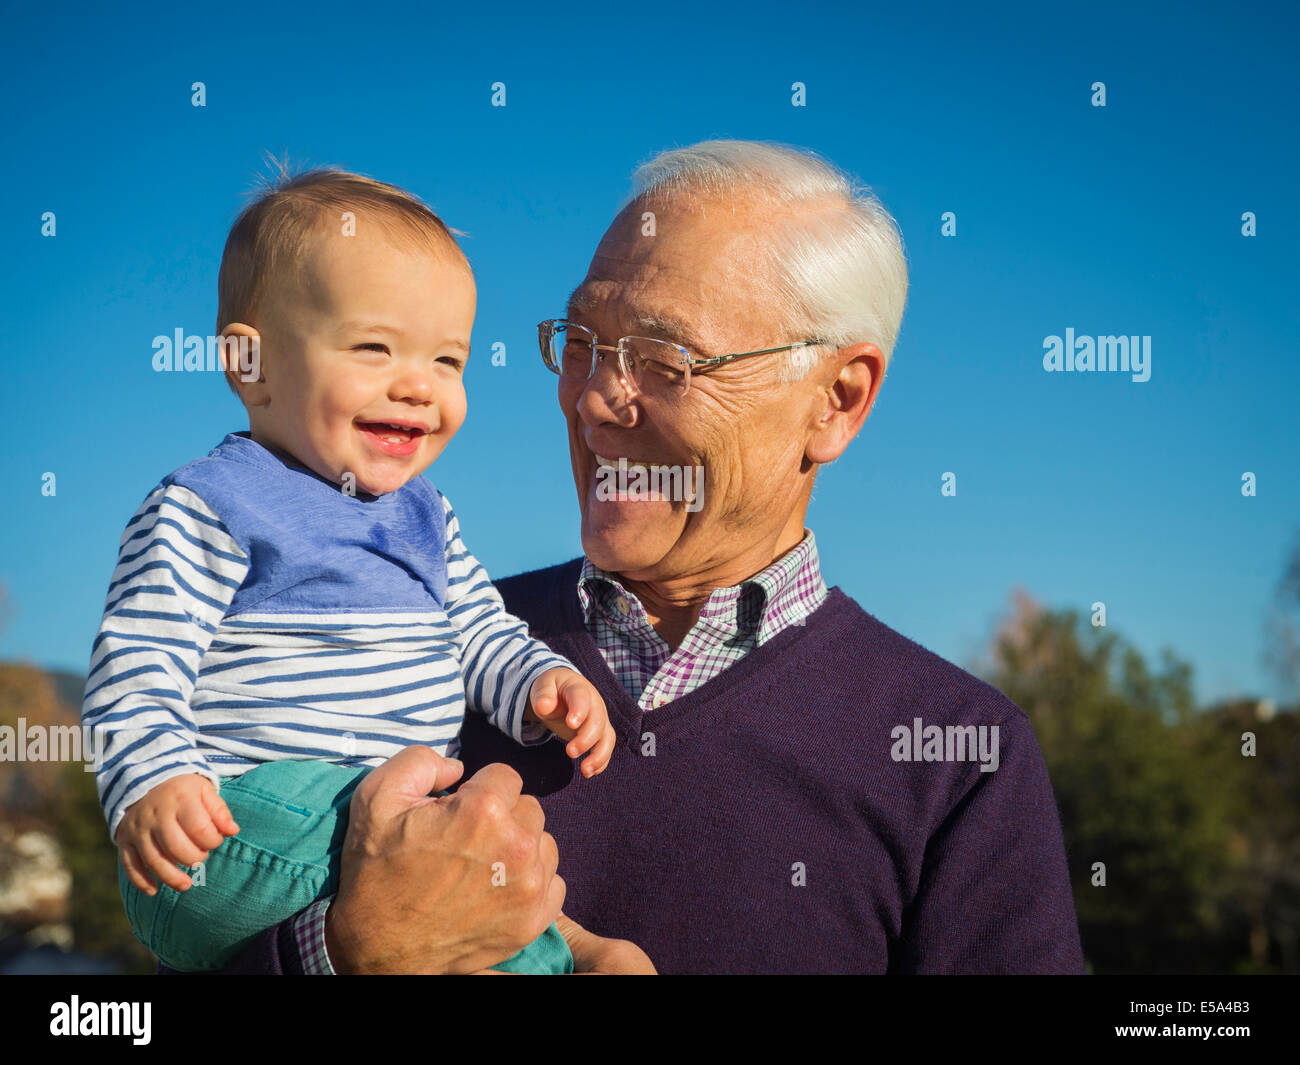 Older man holding grandson outdoors Stock Photo